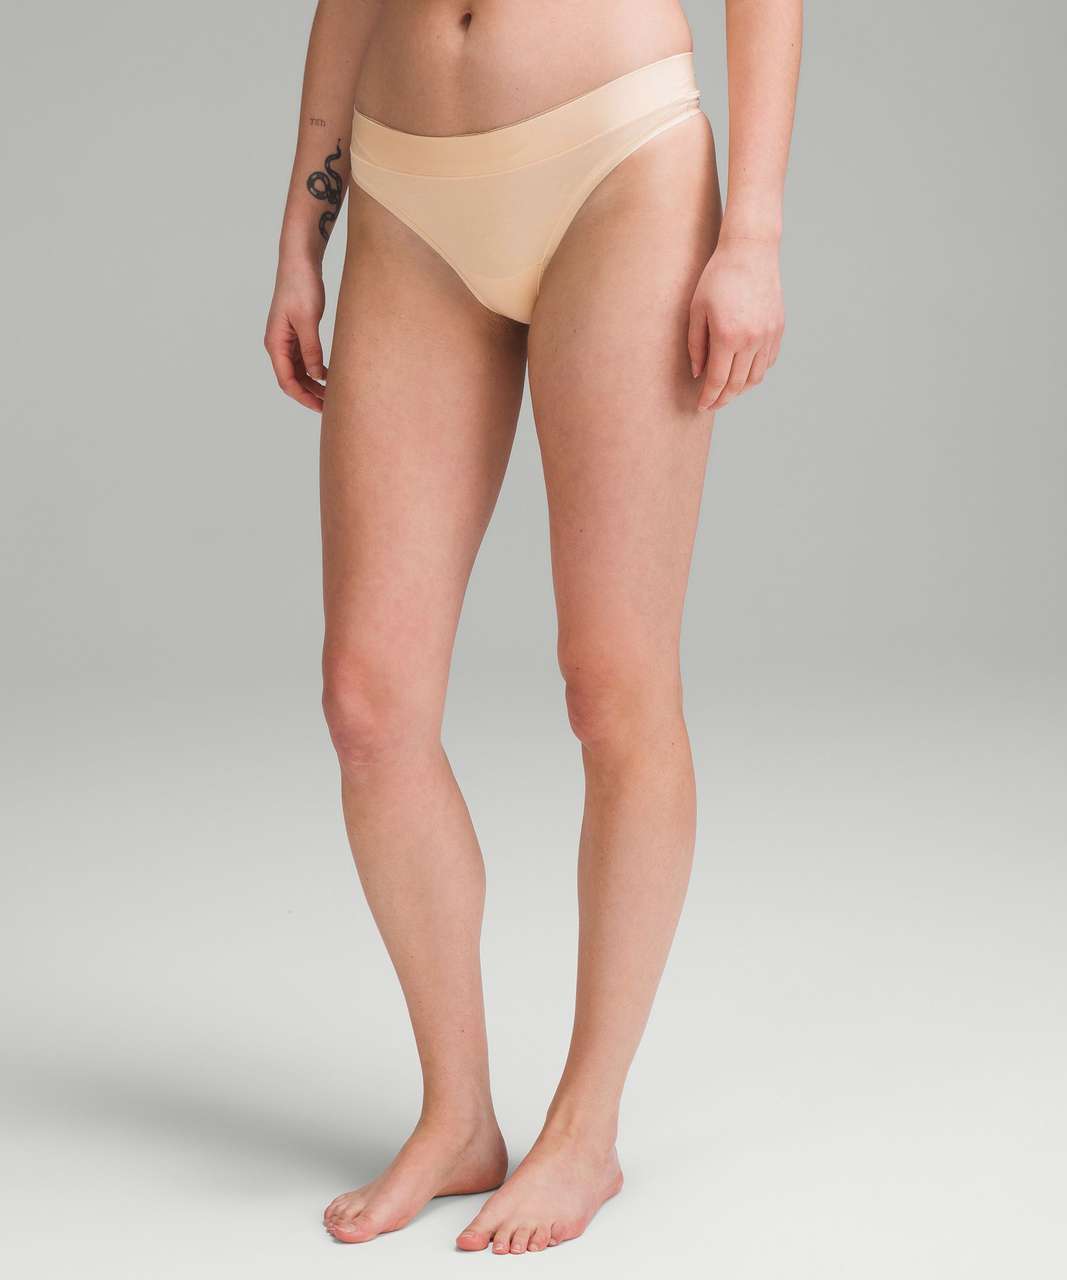 Lululemon UnderEase Mid-Rise Thong Underwear *5 Pack - Solar Orange / Bone / Pale Linen / Contour / French Press